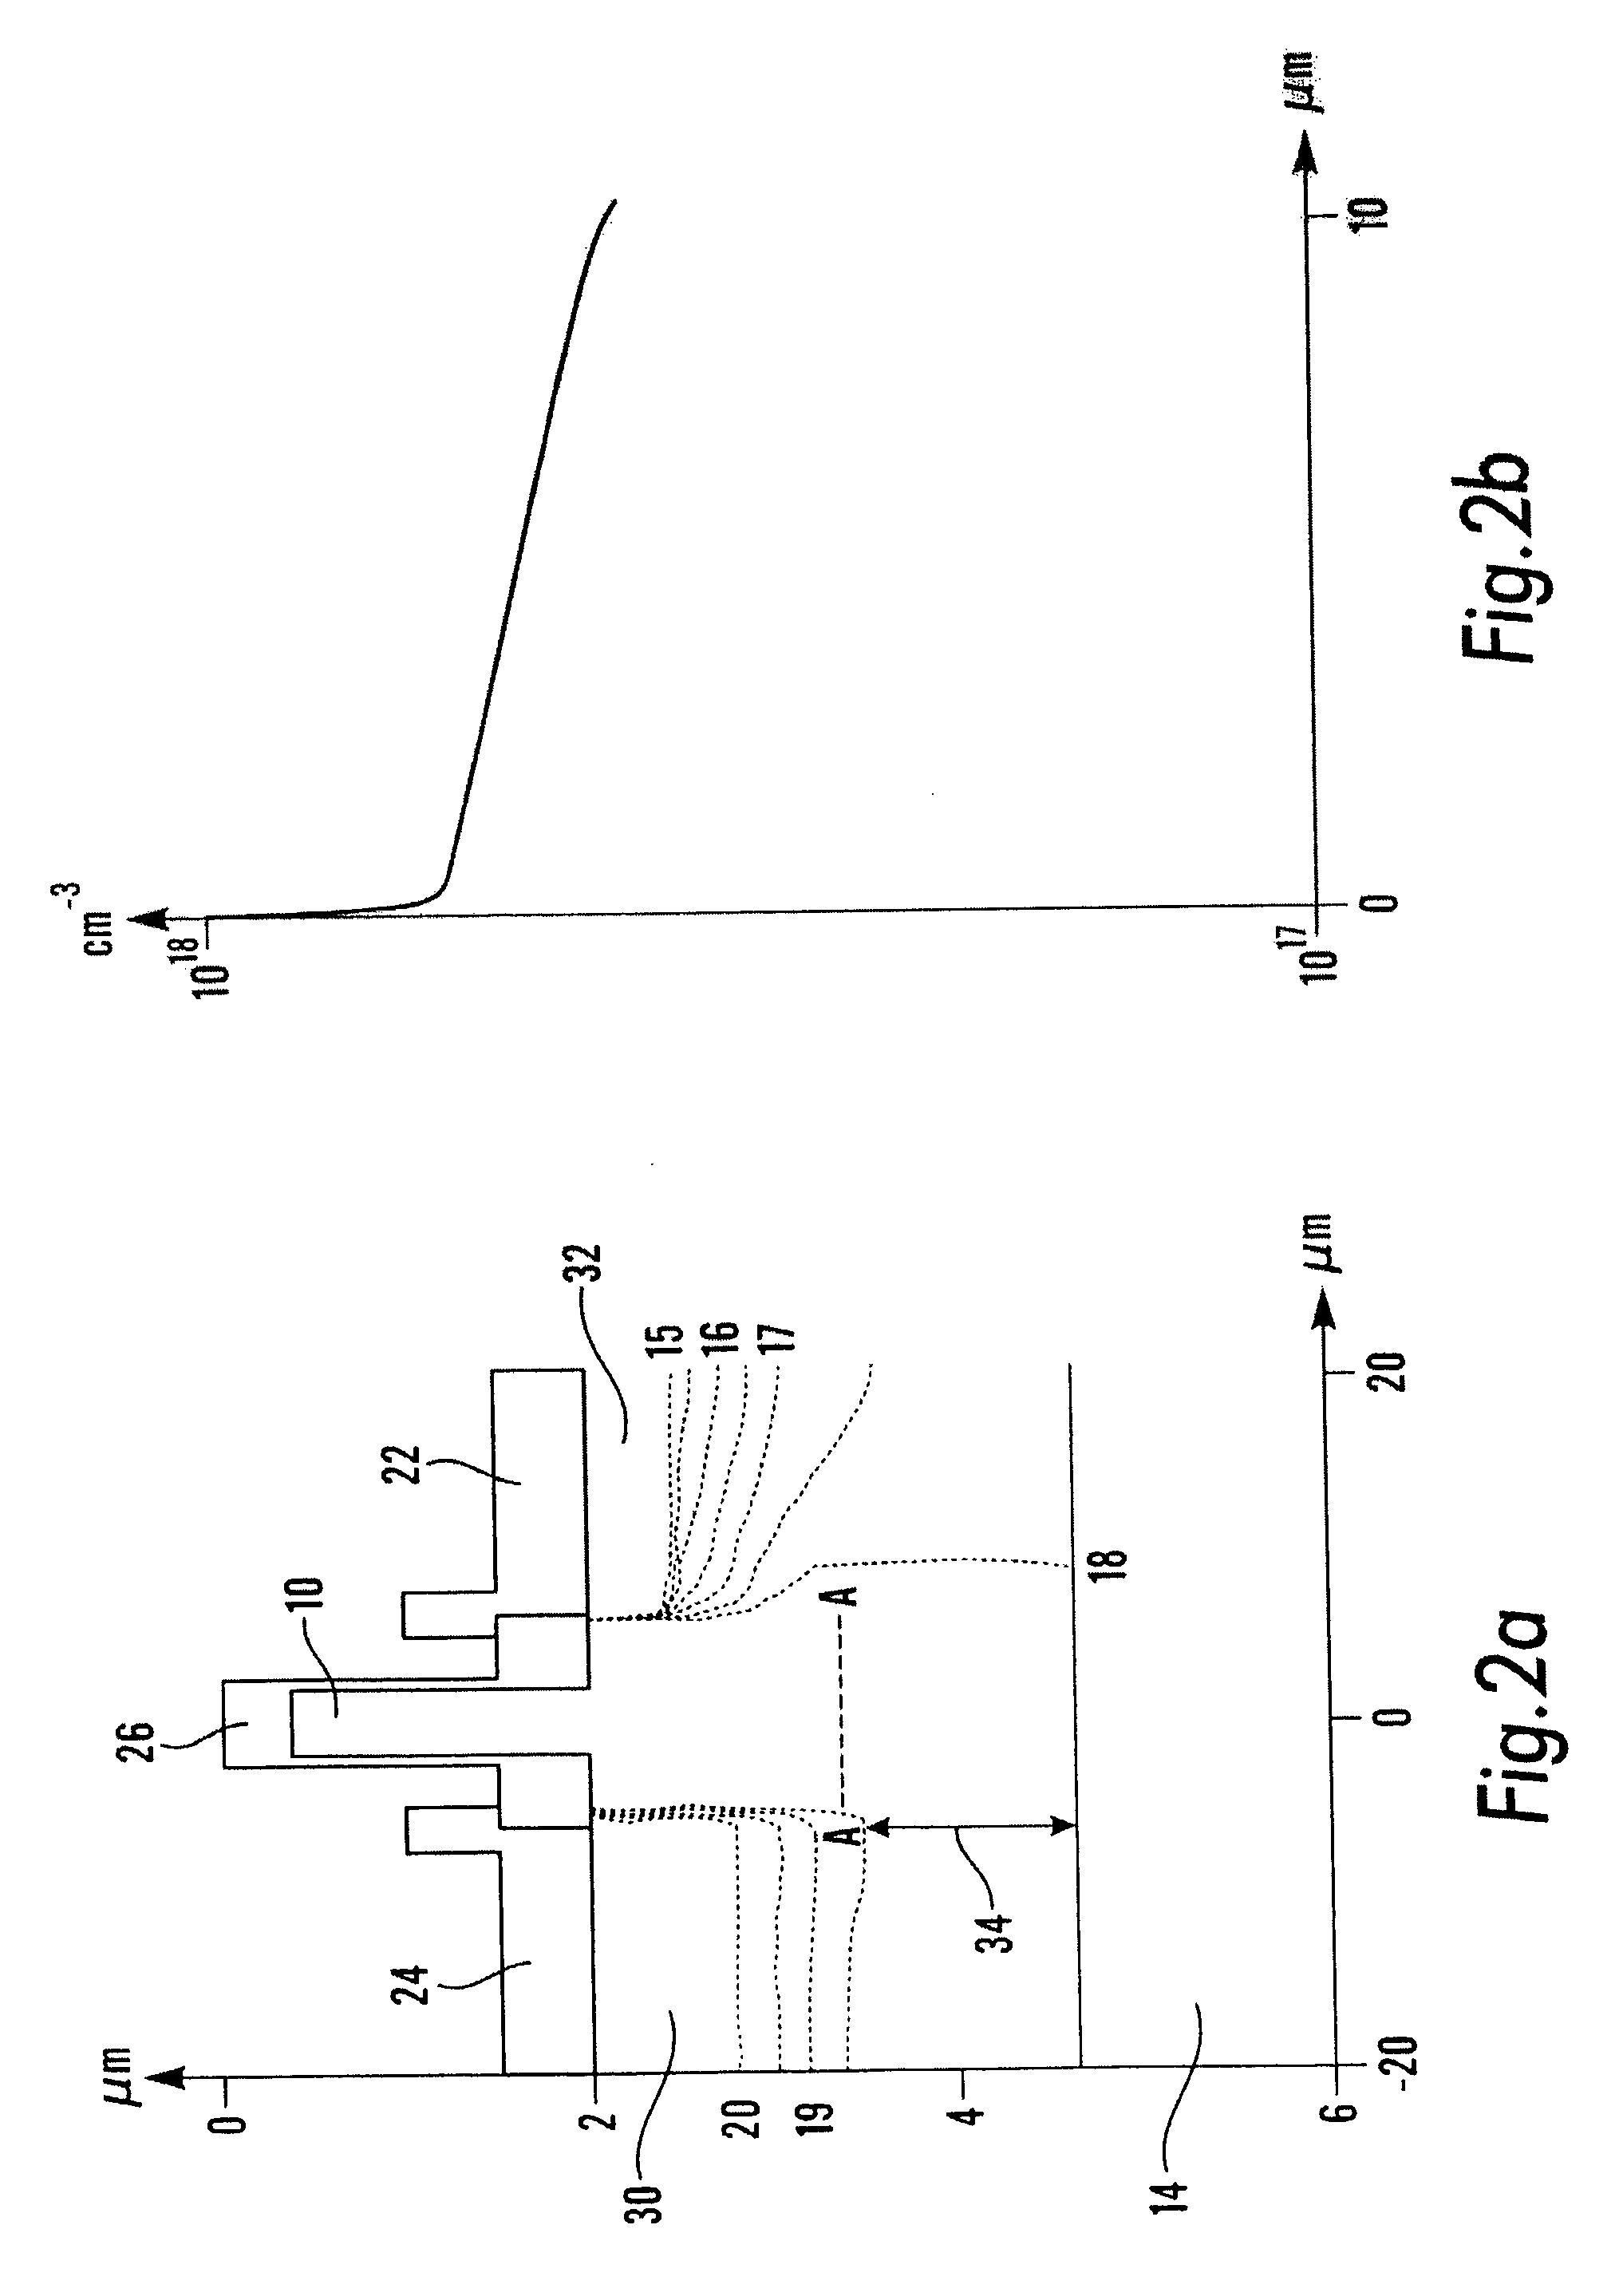 Electro-optic modulator